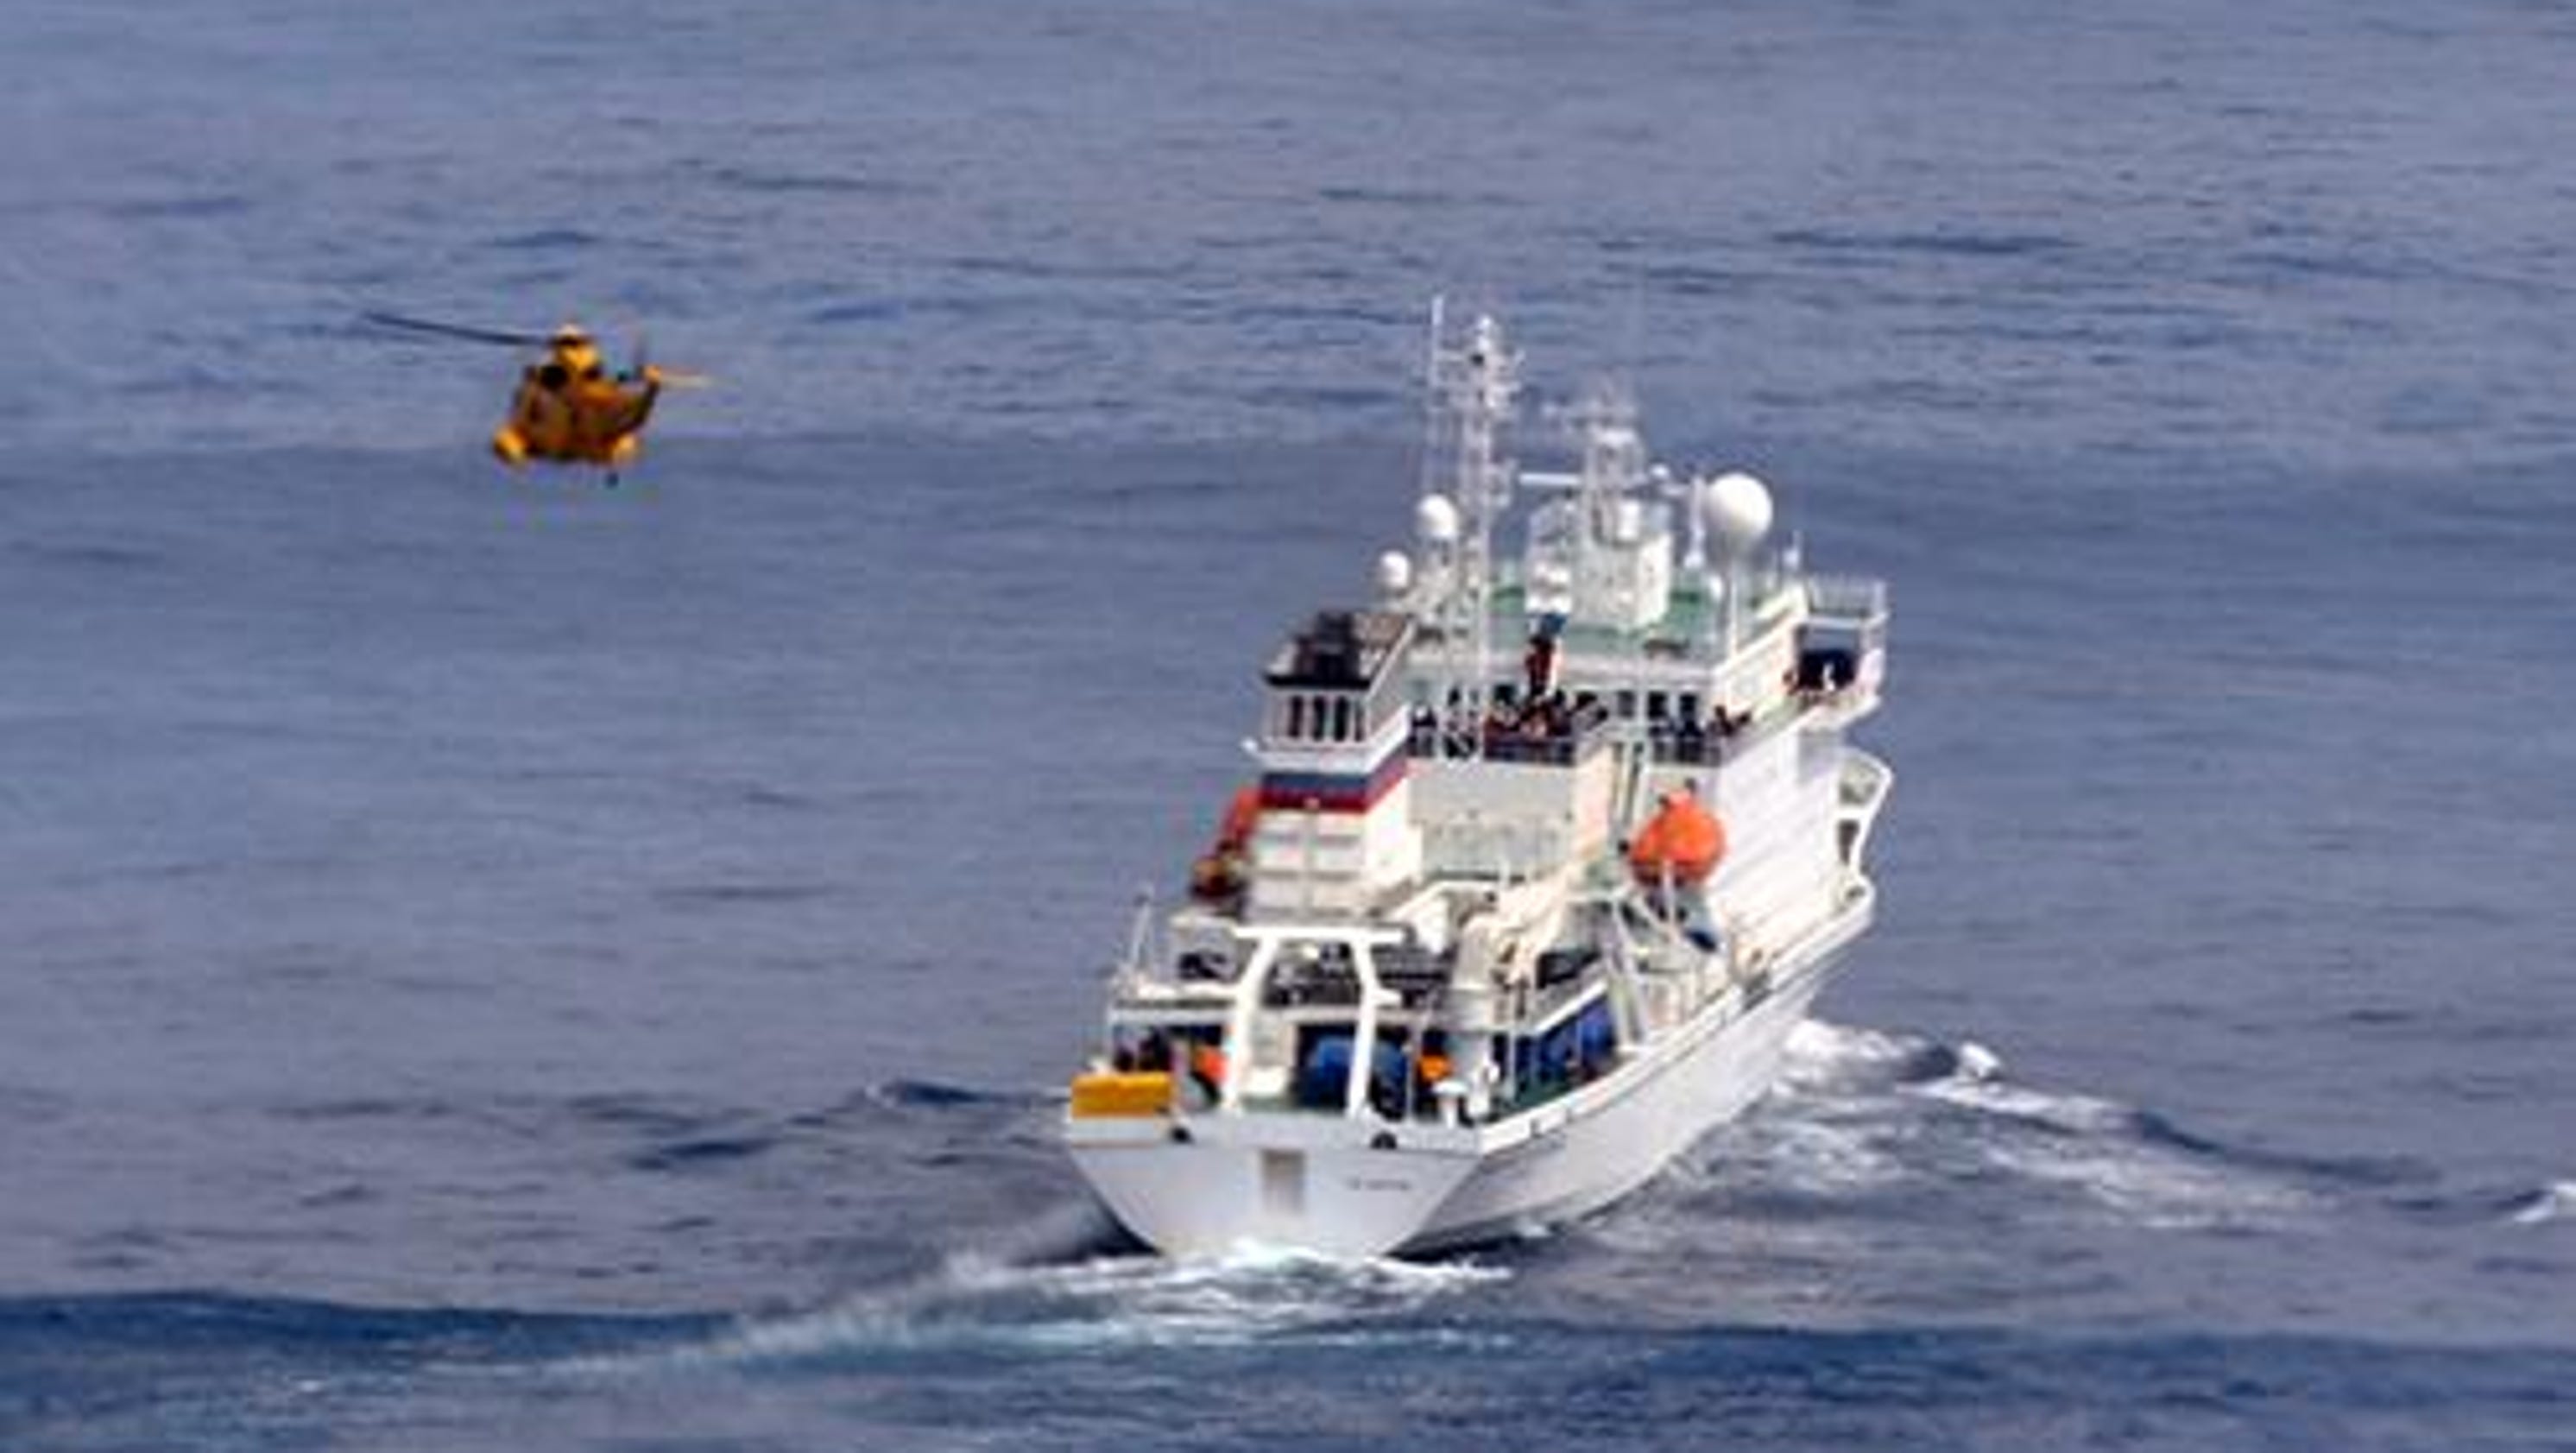 rescue of cruise ship passenger